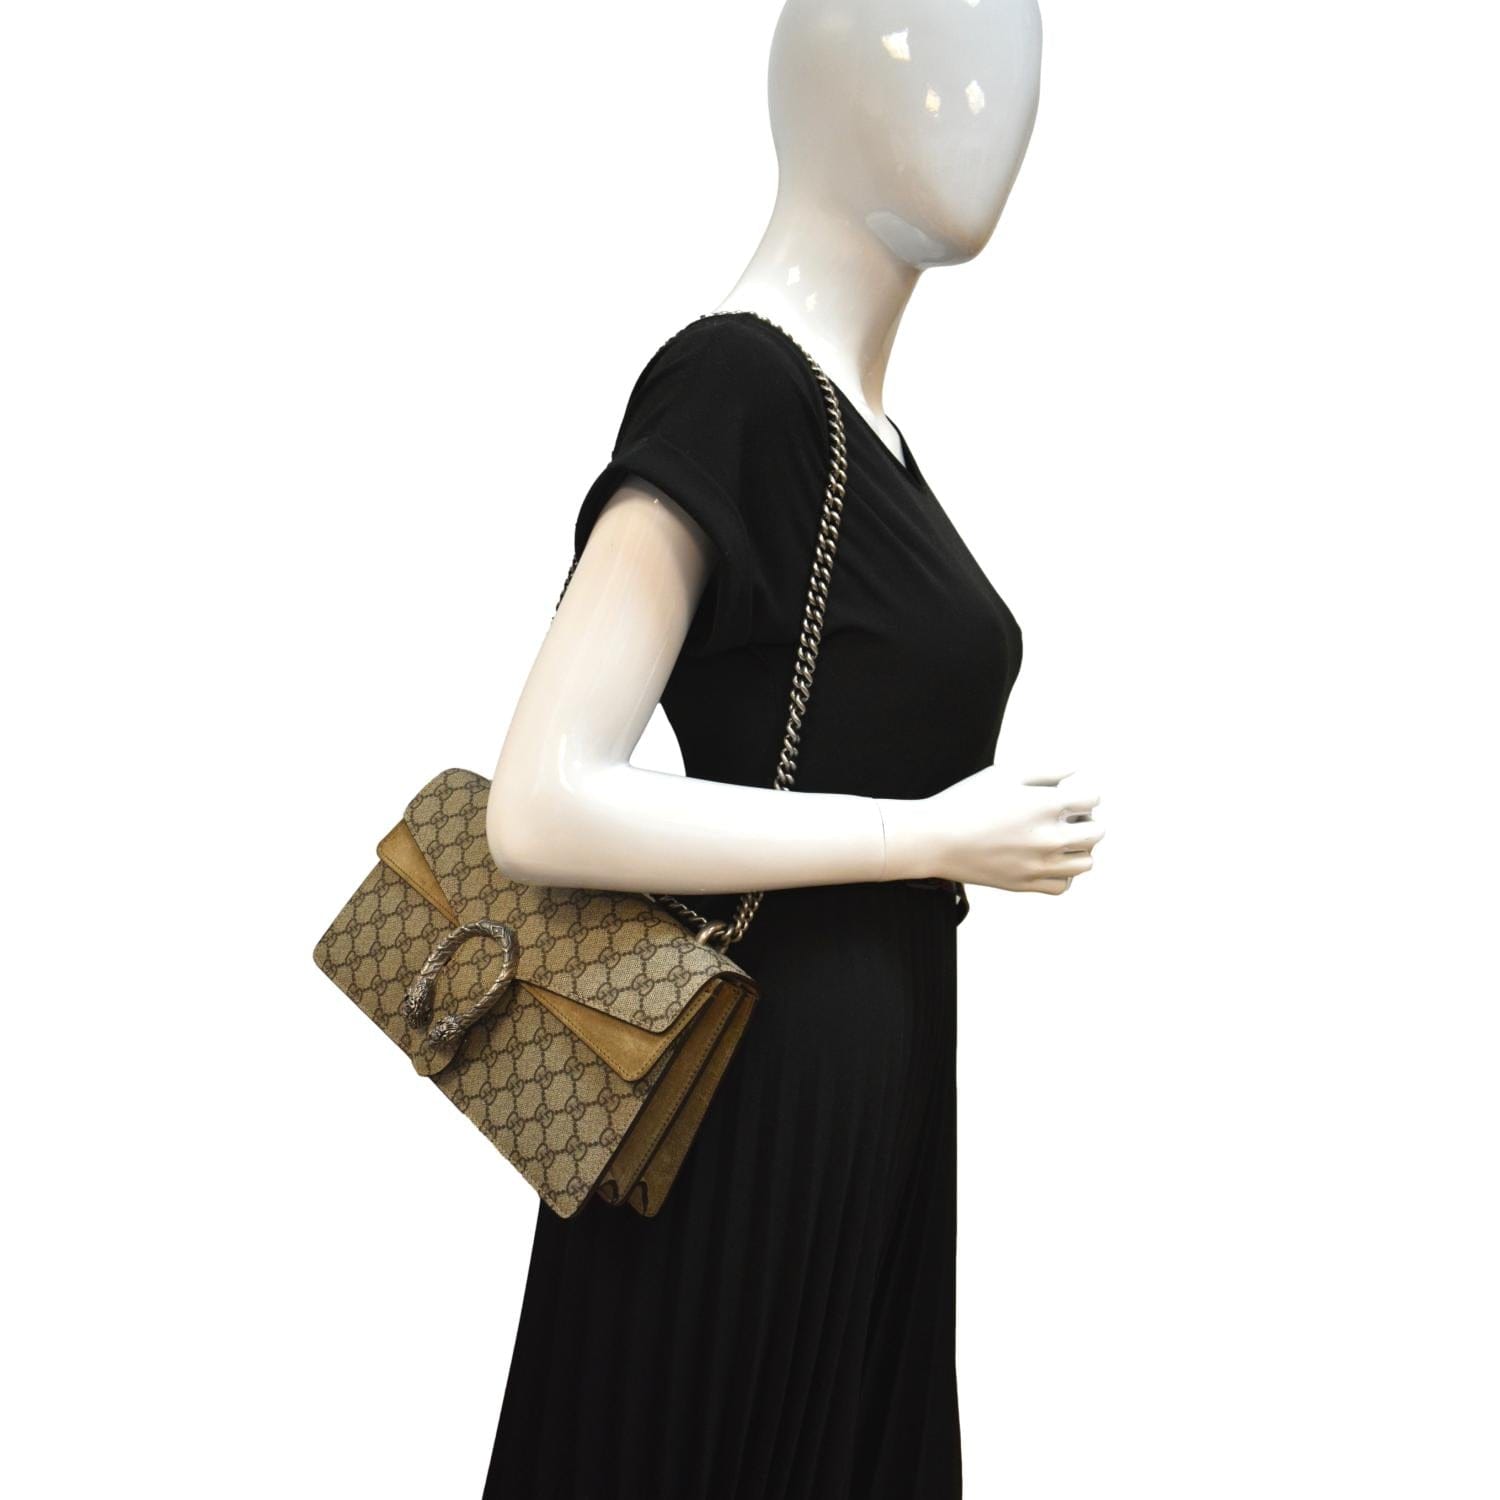 Dionysus GG Small Shoulder Bag in Beige - Gucci